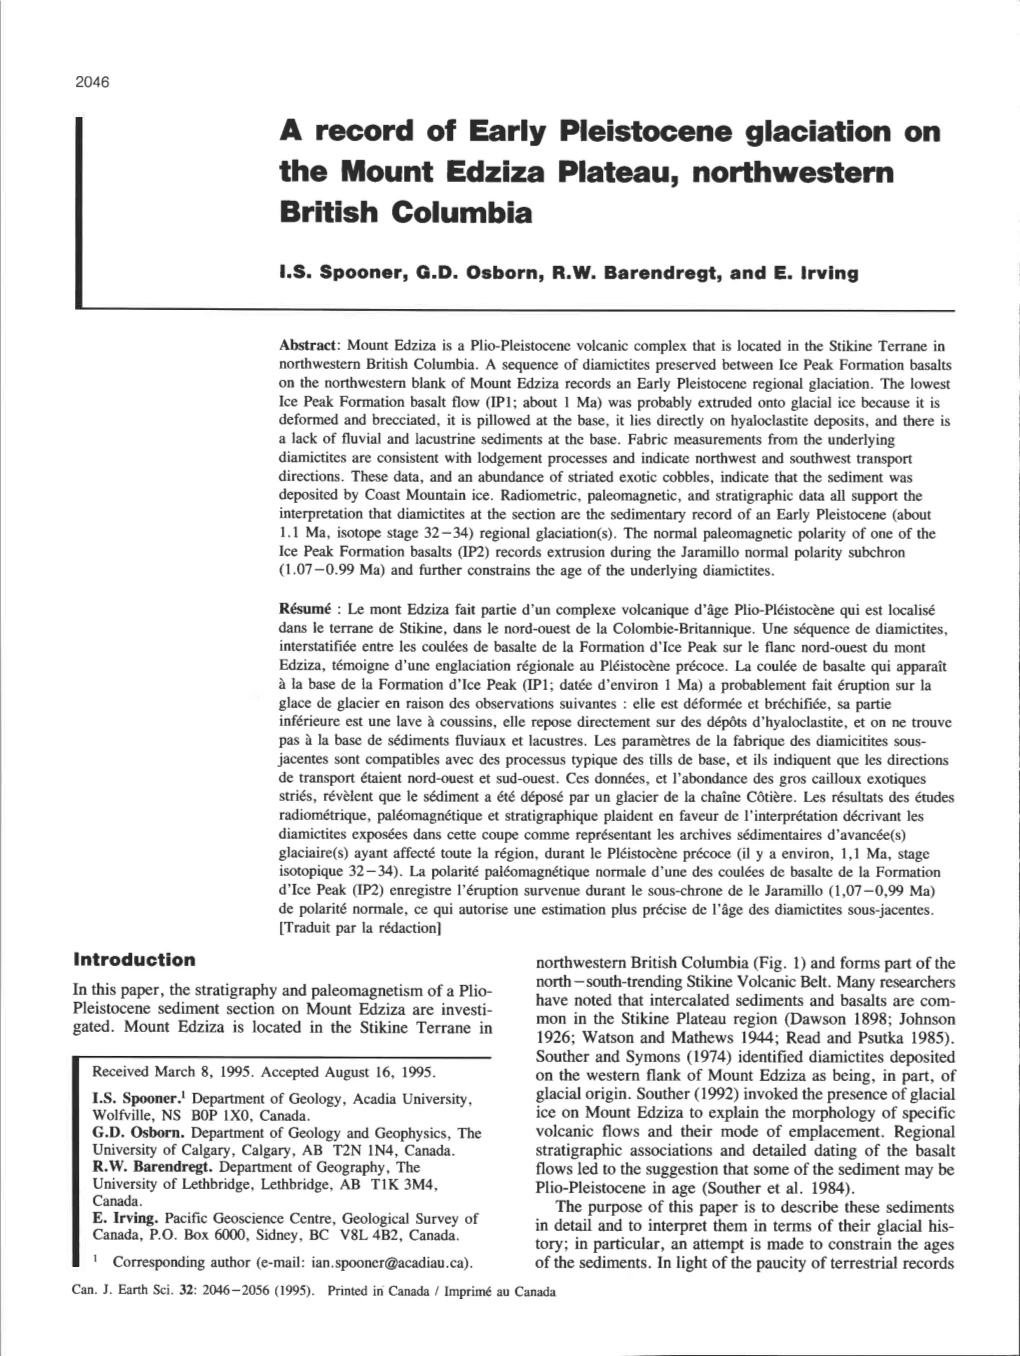 A Record of Early Pleistocene Glaciation on the Mount Edziza Plateau, Northwestern British Columbia I I.S